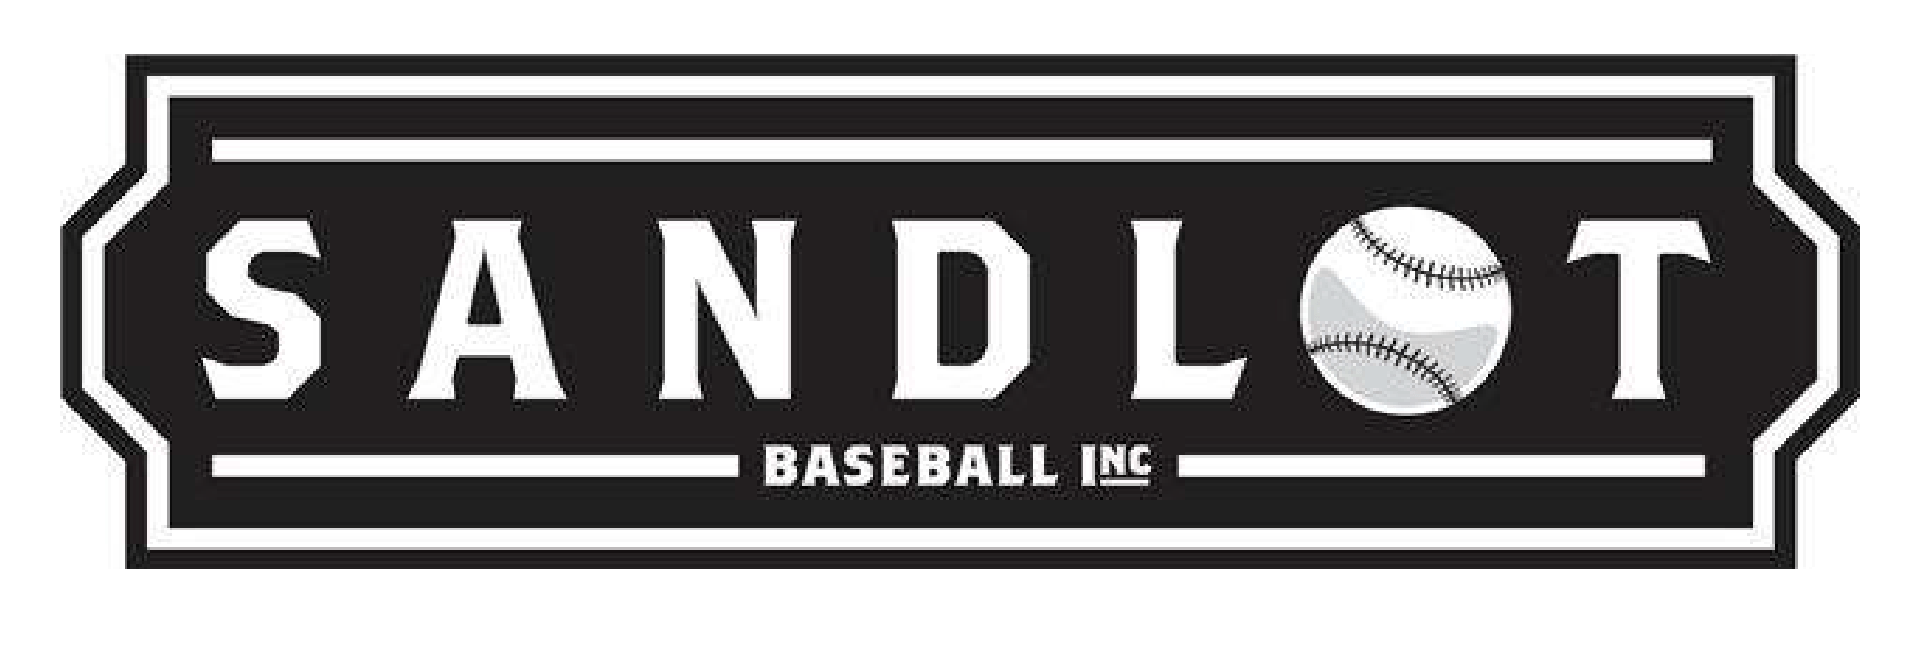 Sandlot Softball Logo - Sandlot Baseball, Inc.